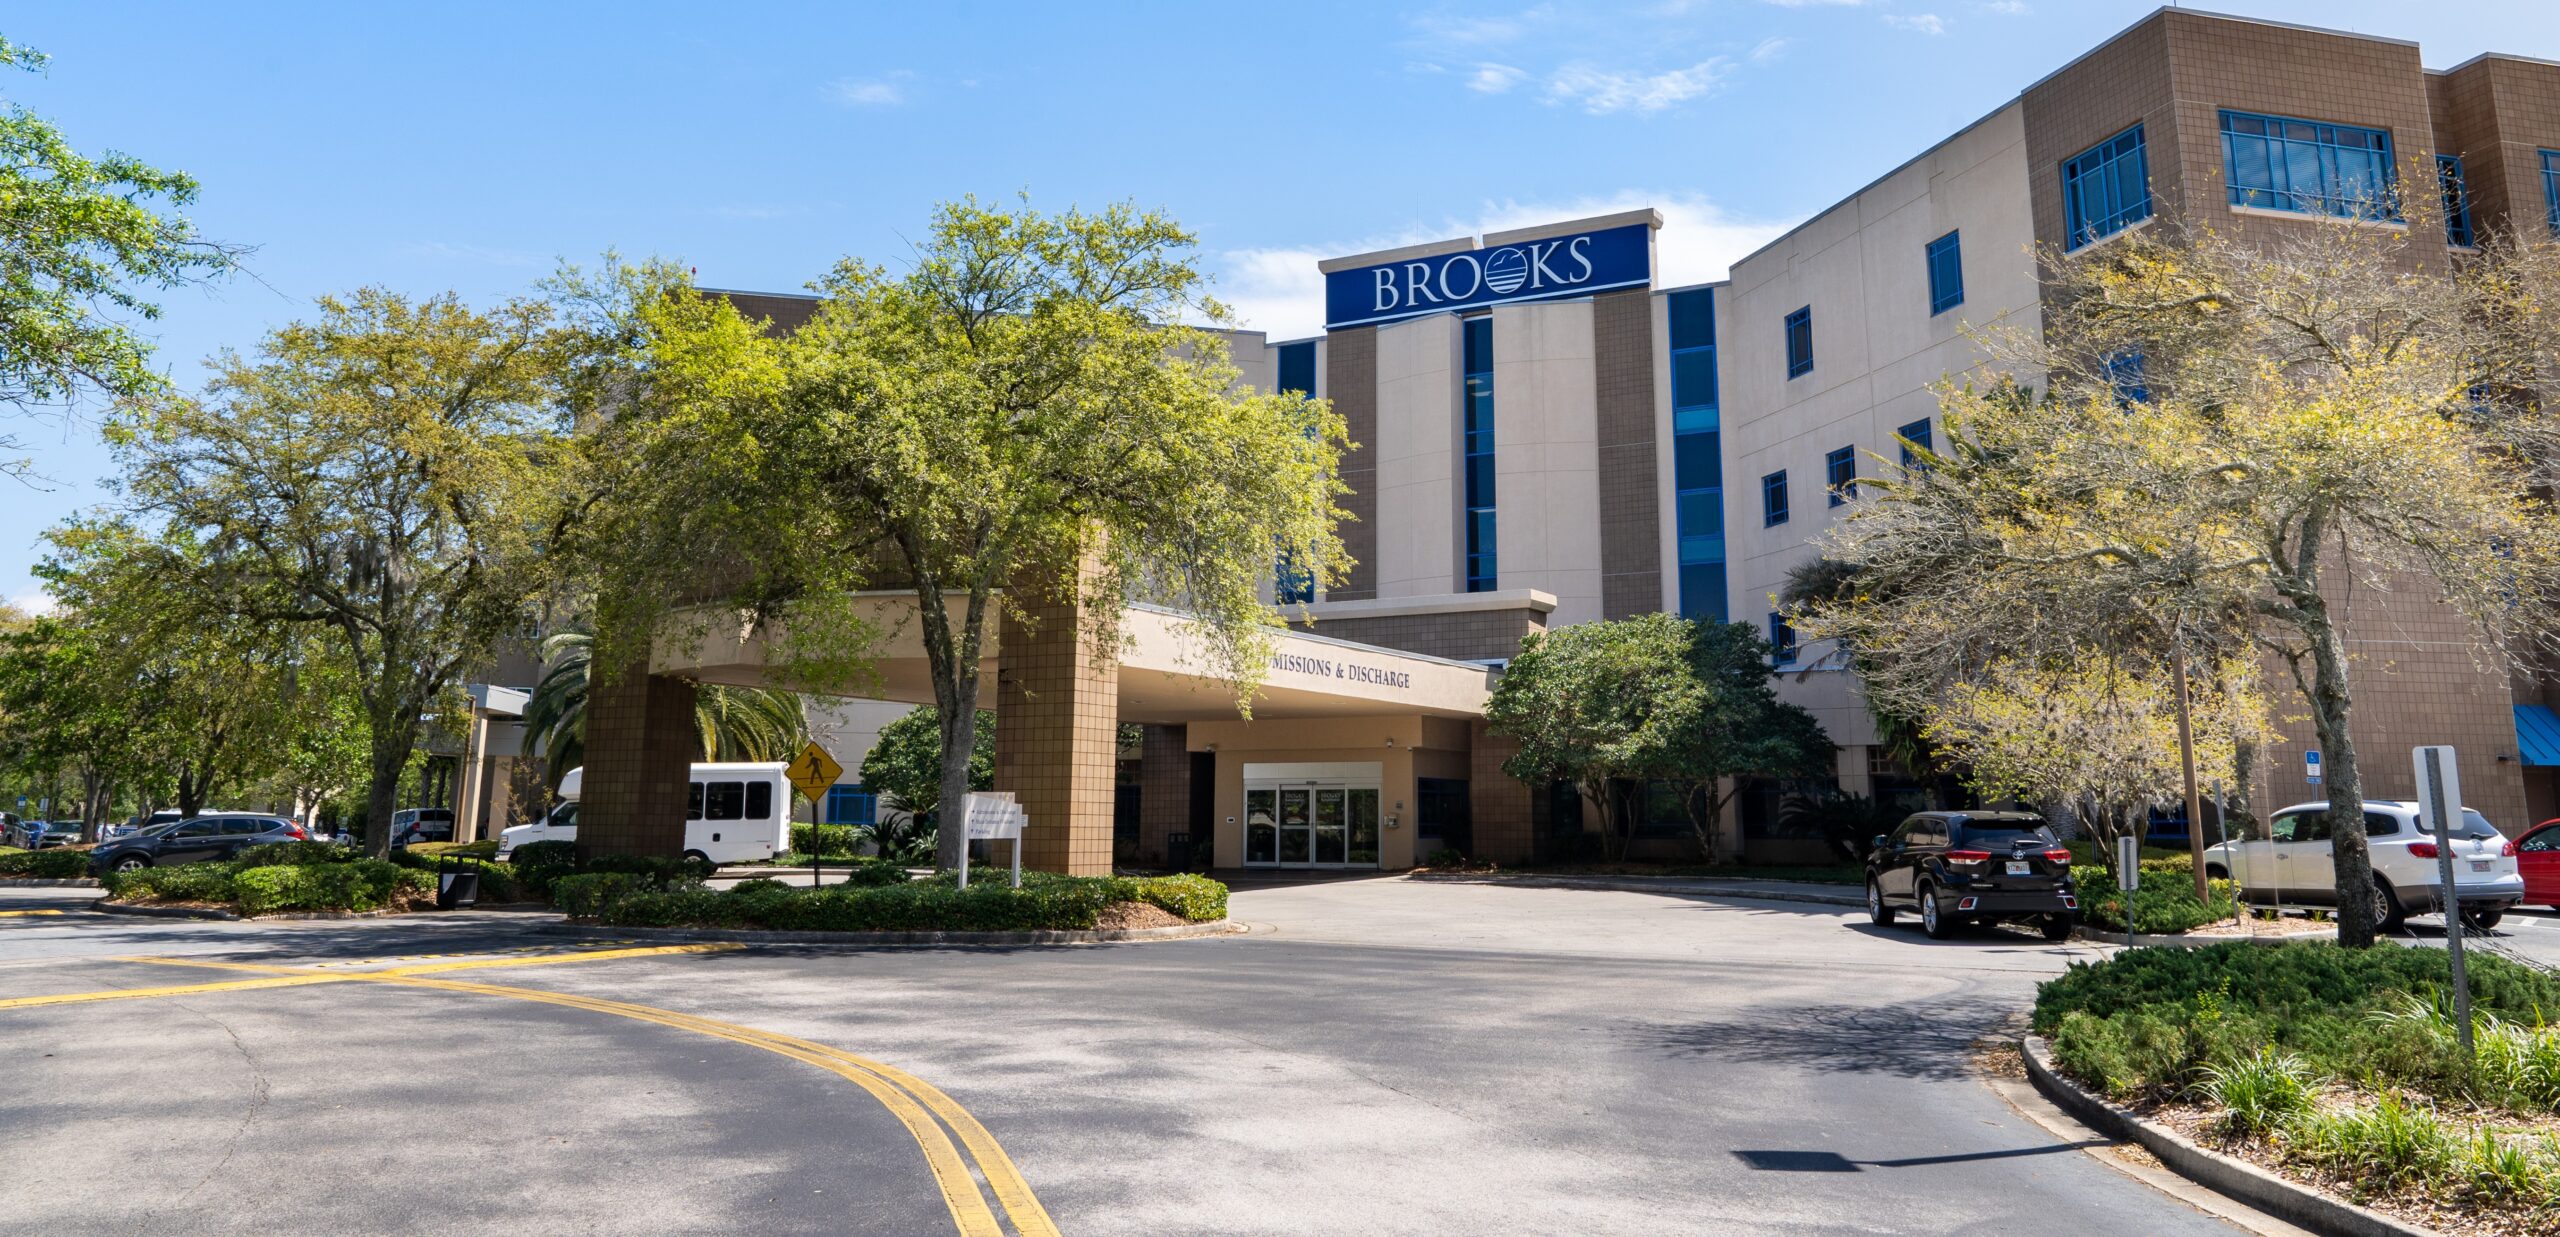 Brooks Rehabilitation Univeristy hospital campus in Jacksonville, FL.